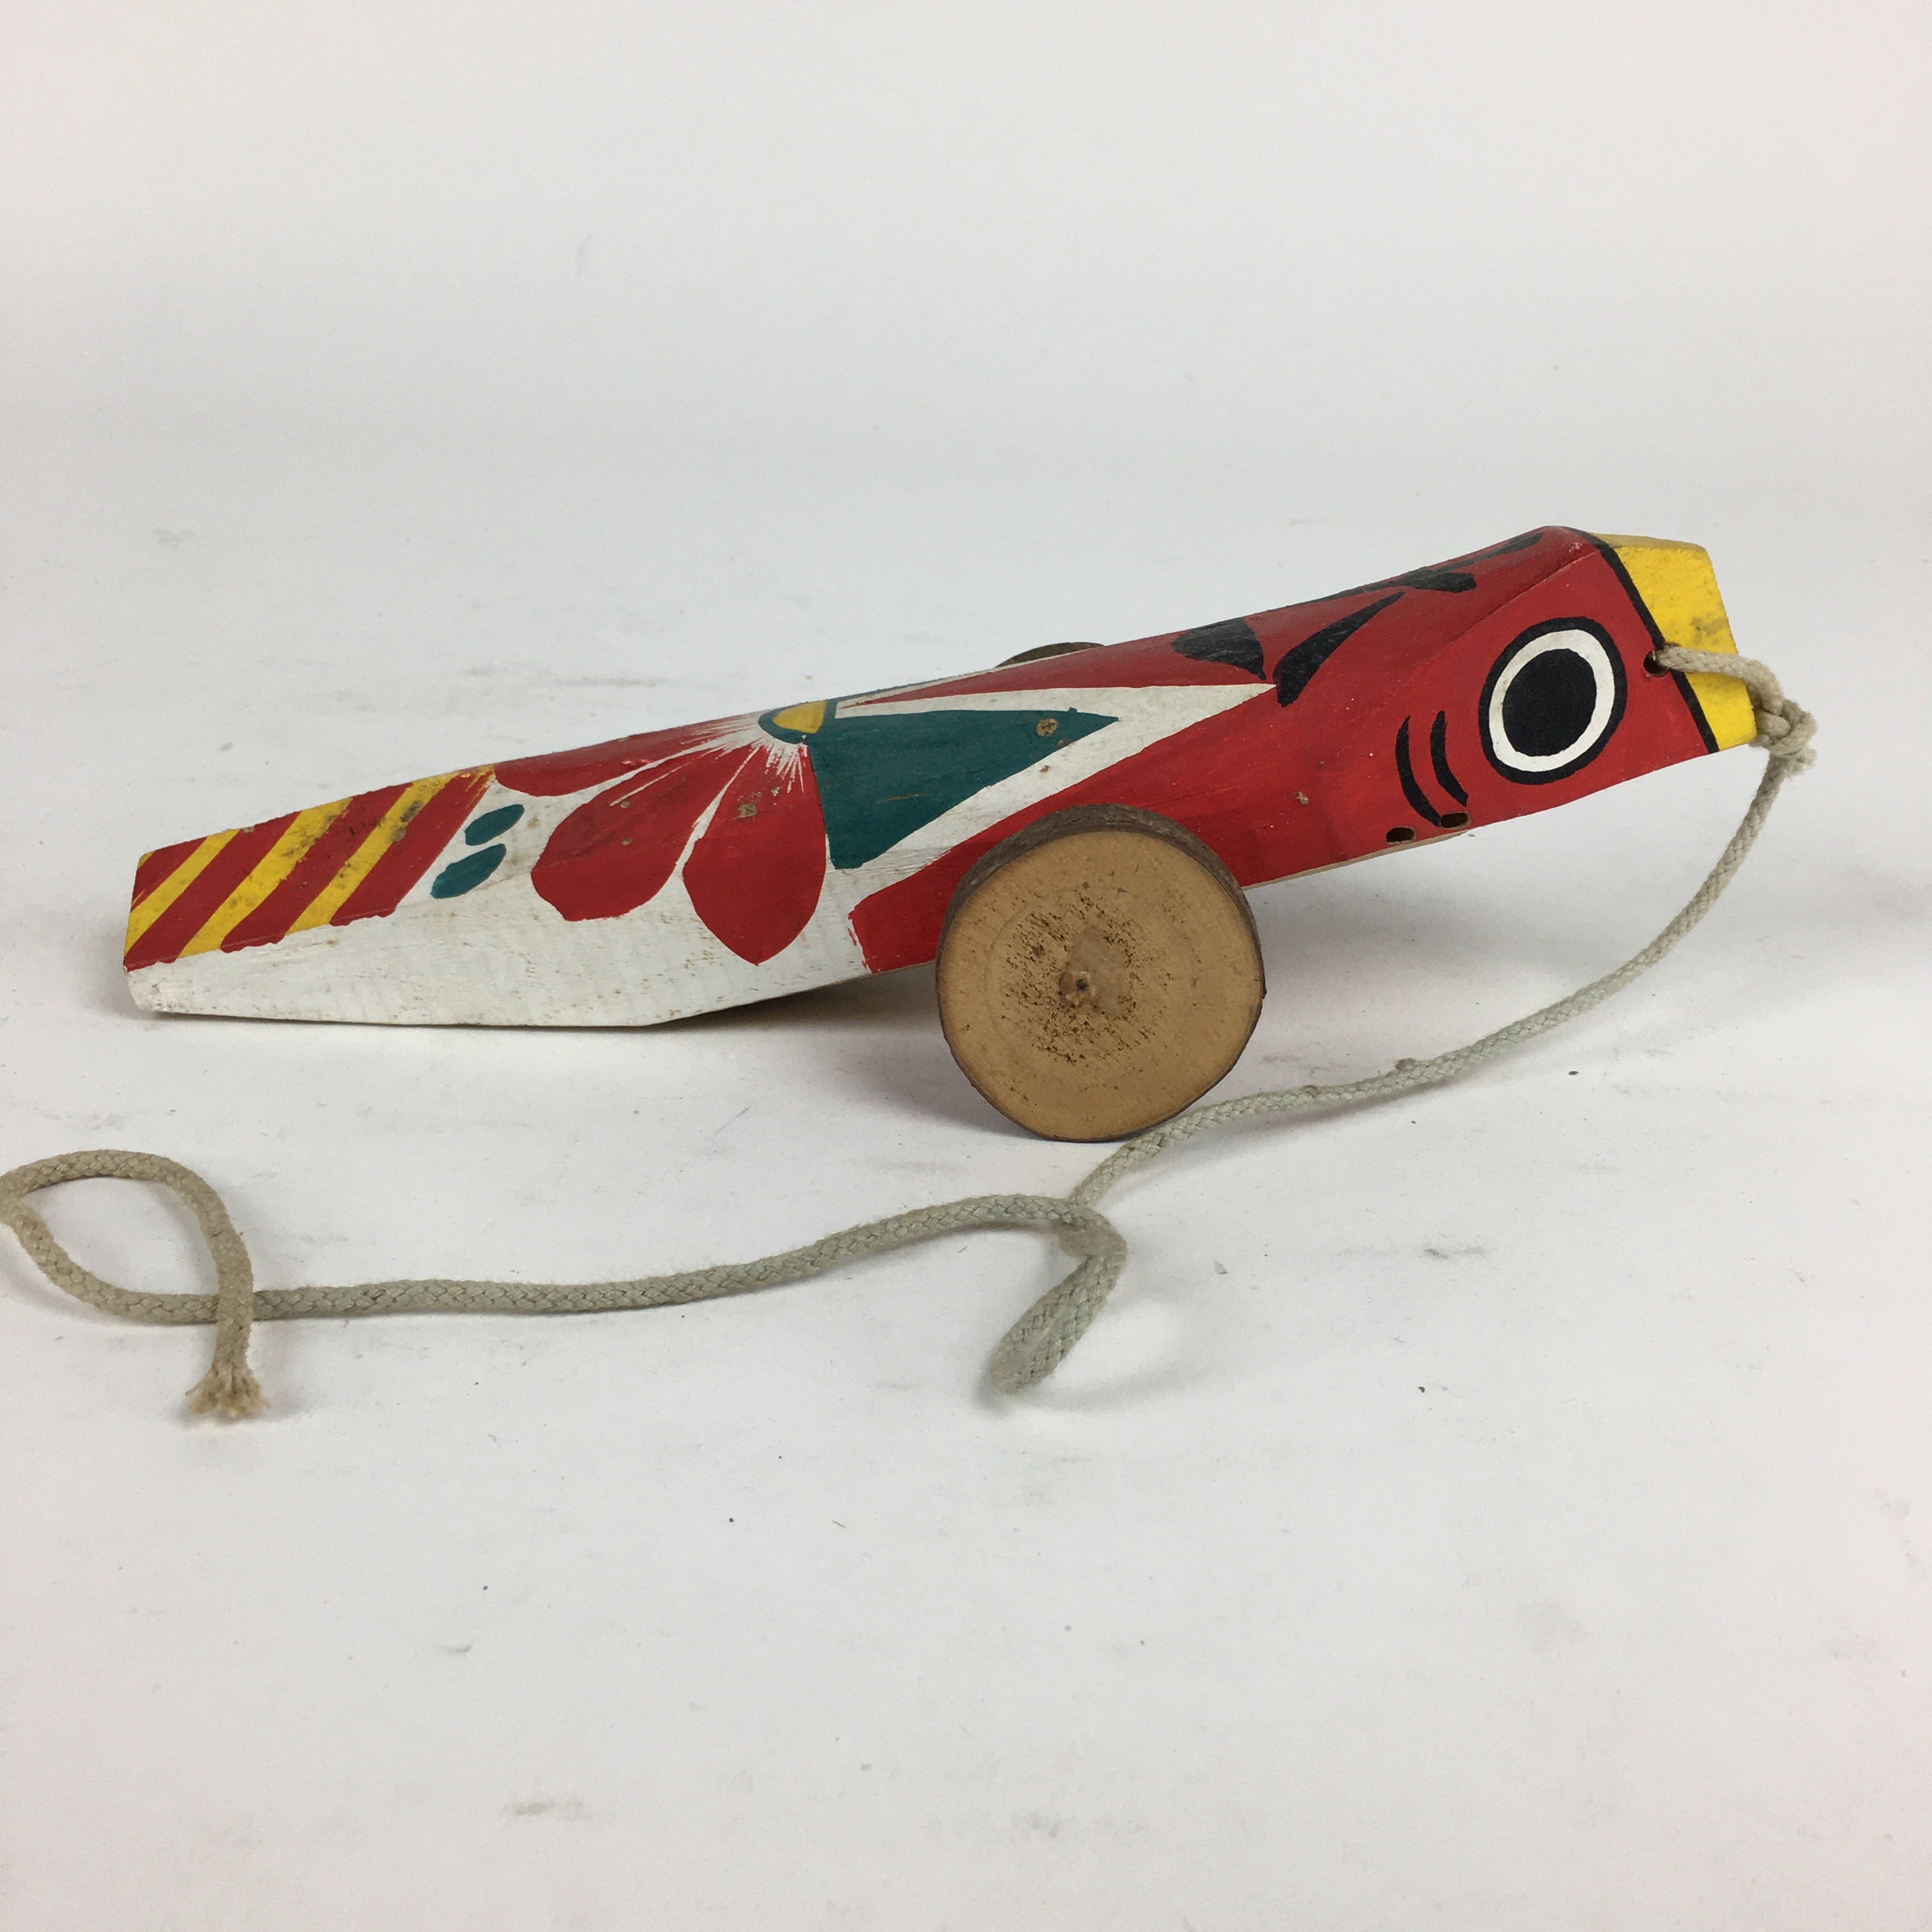 Japanese Wooden Handmade Traditional Toy Vtg Red Pheasant Bird Car JK265